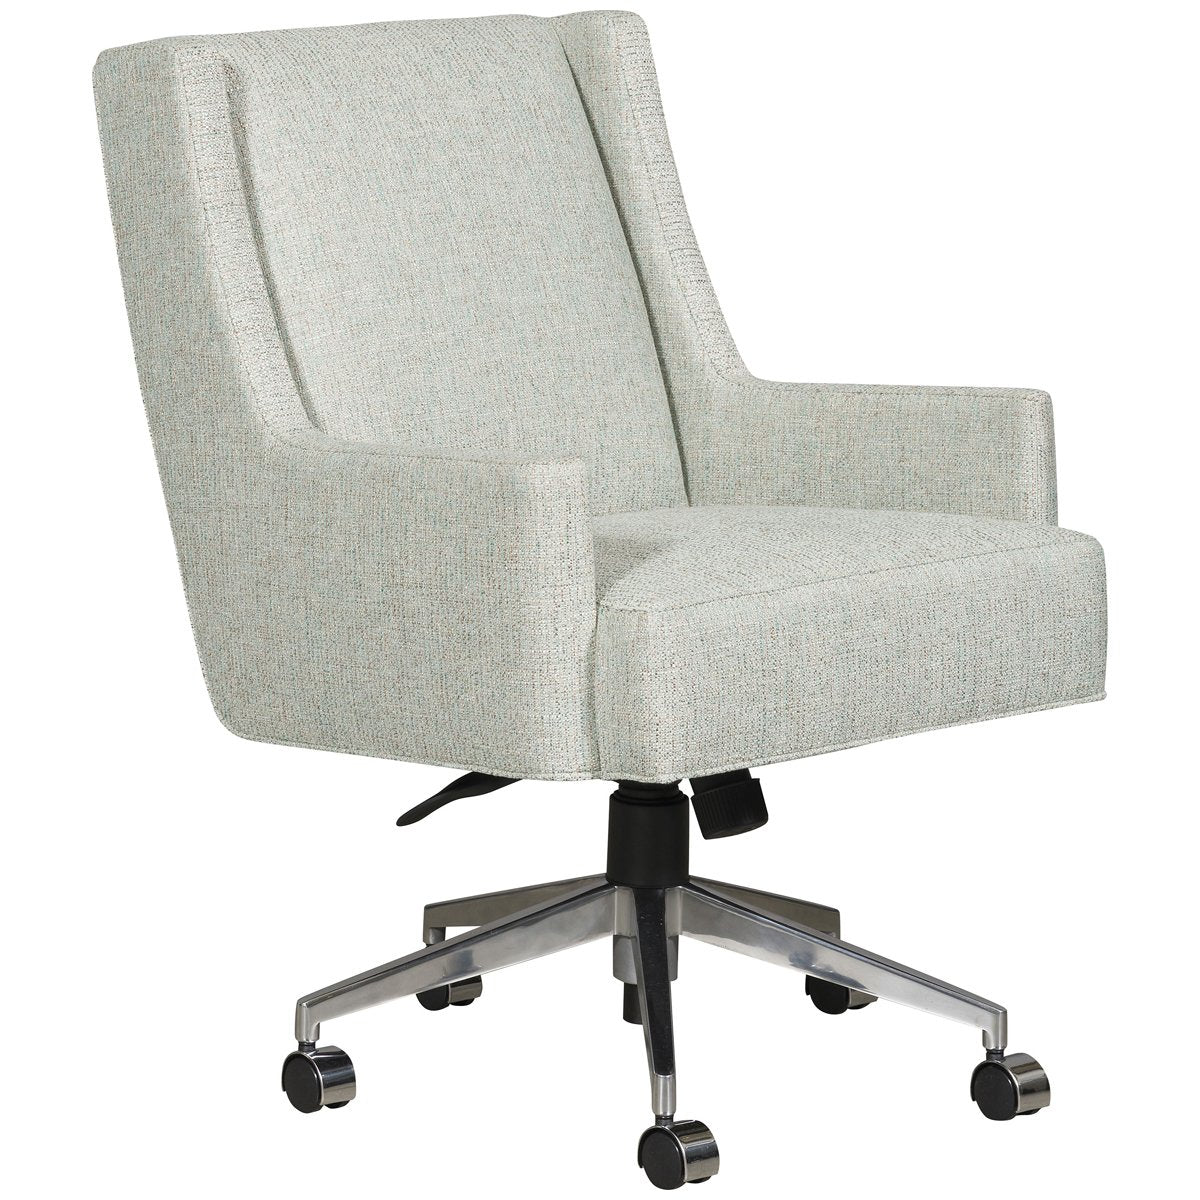 Vanguard Furniture Owen Desk Chair